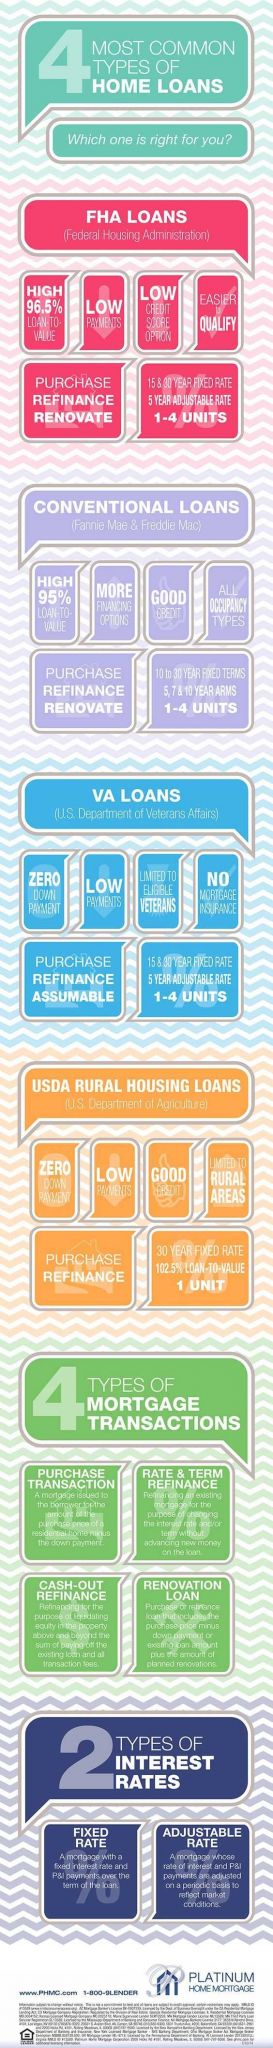 Composite Score Worksheet Usmc as Well as 21 Best Va Home Loan Entitlements Images On Pinterest